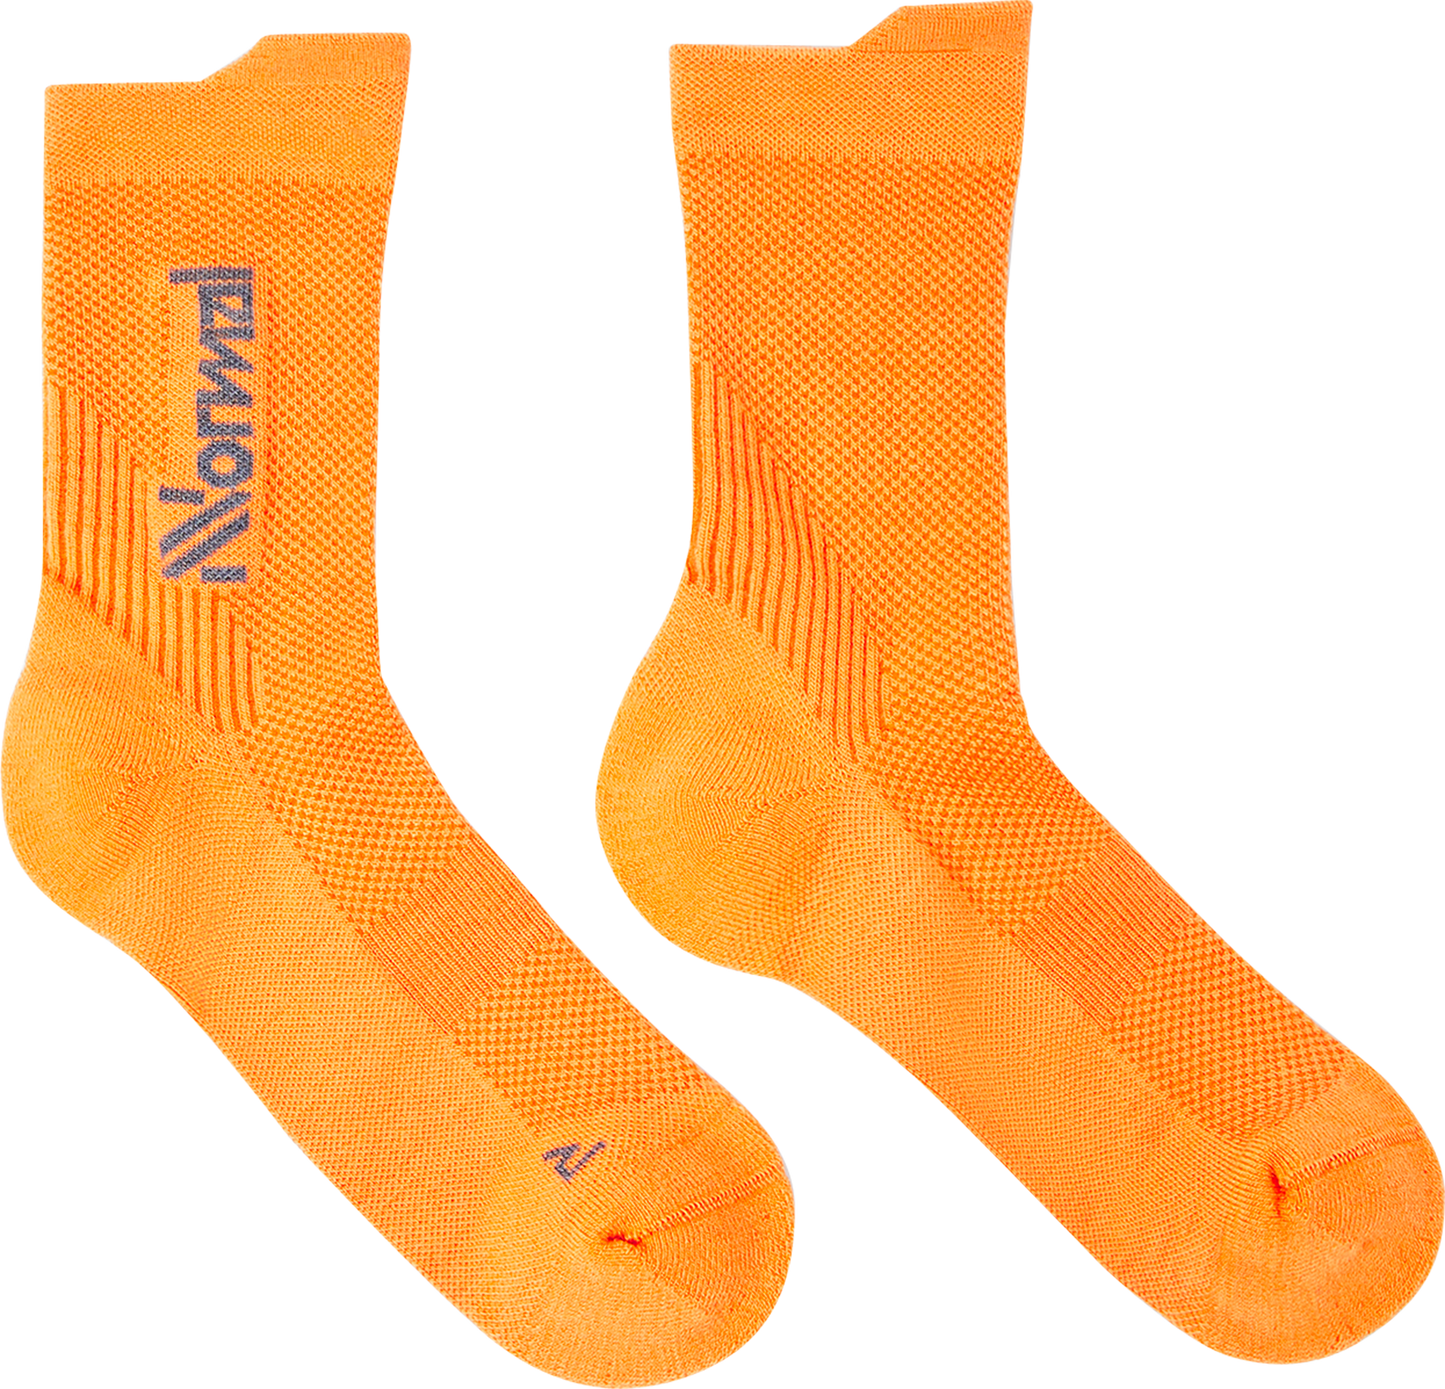 Unisex NNormal Merino Socks - Orange